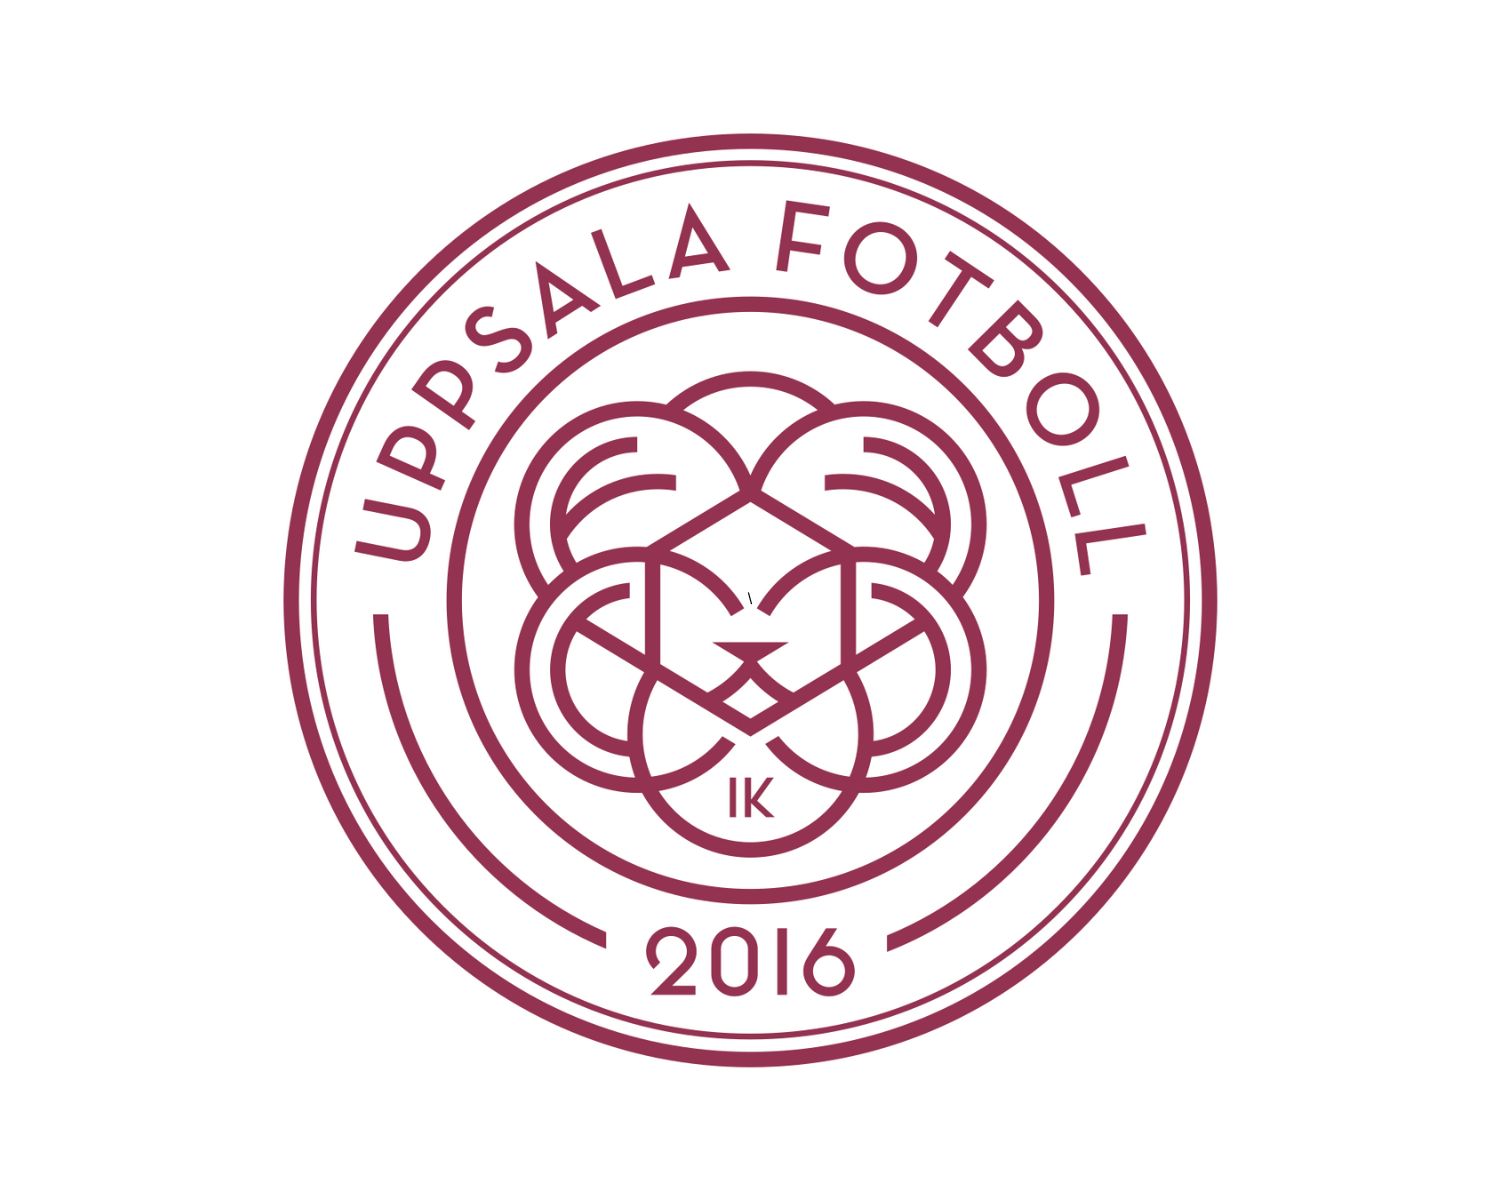 ik-uppsala-fotboll-22-football-club-facts